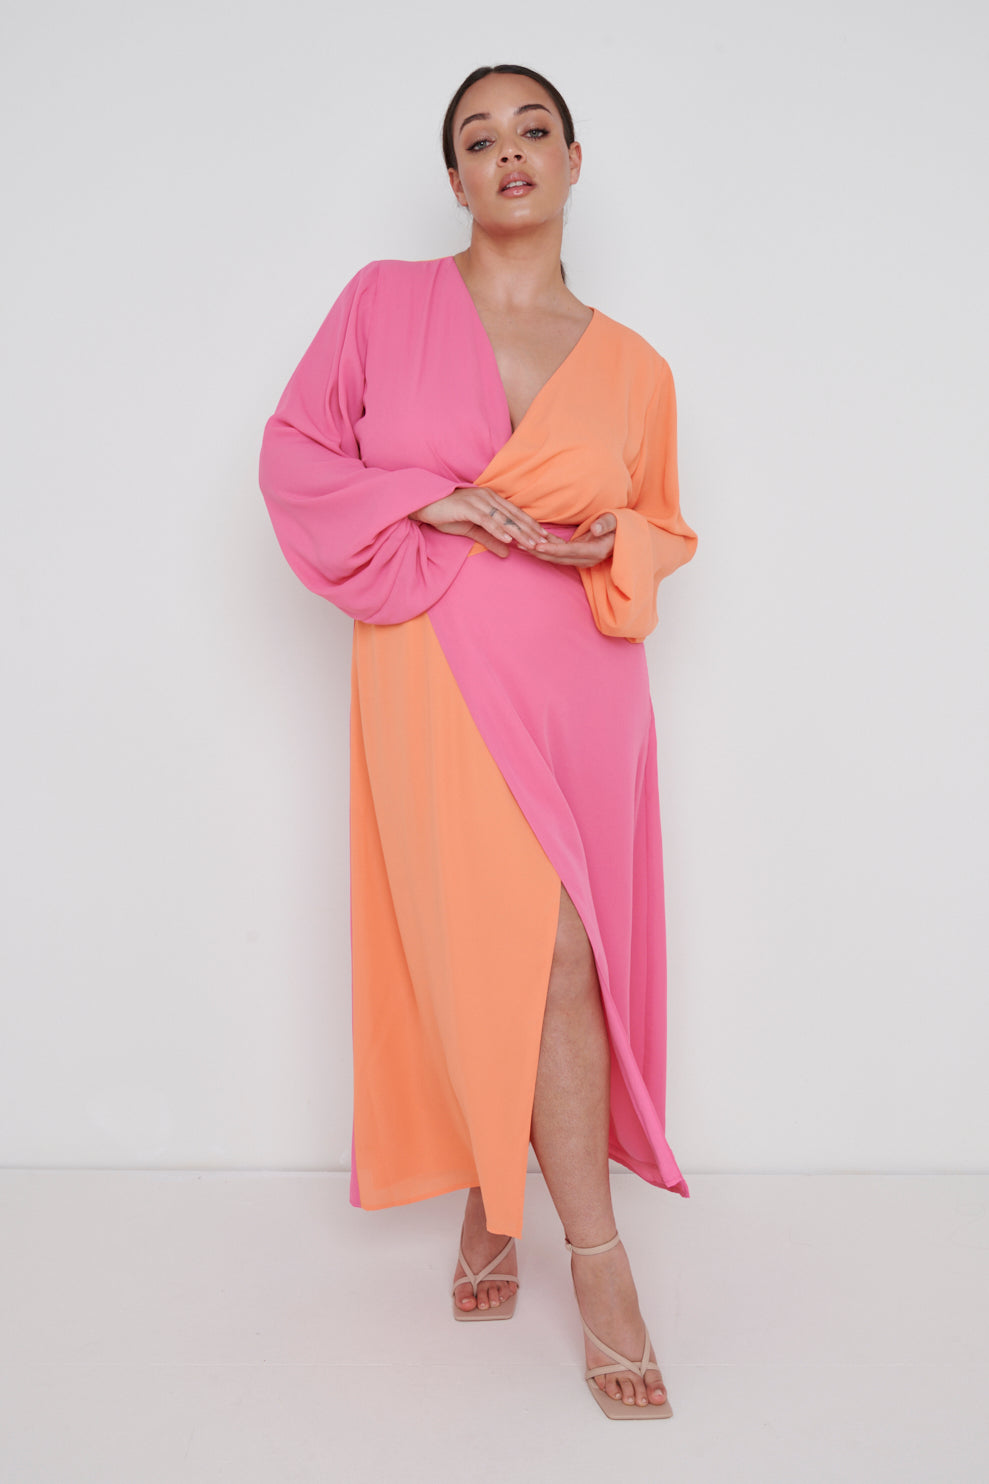 Frieda Knot Contrast Dress Curve - Orange et Rose